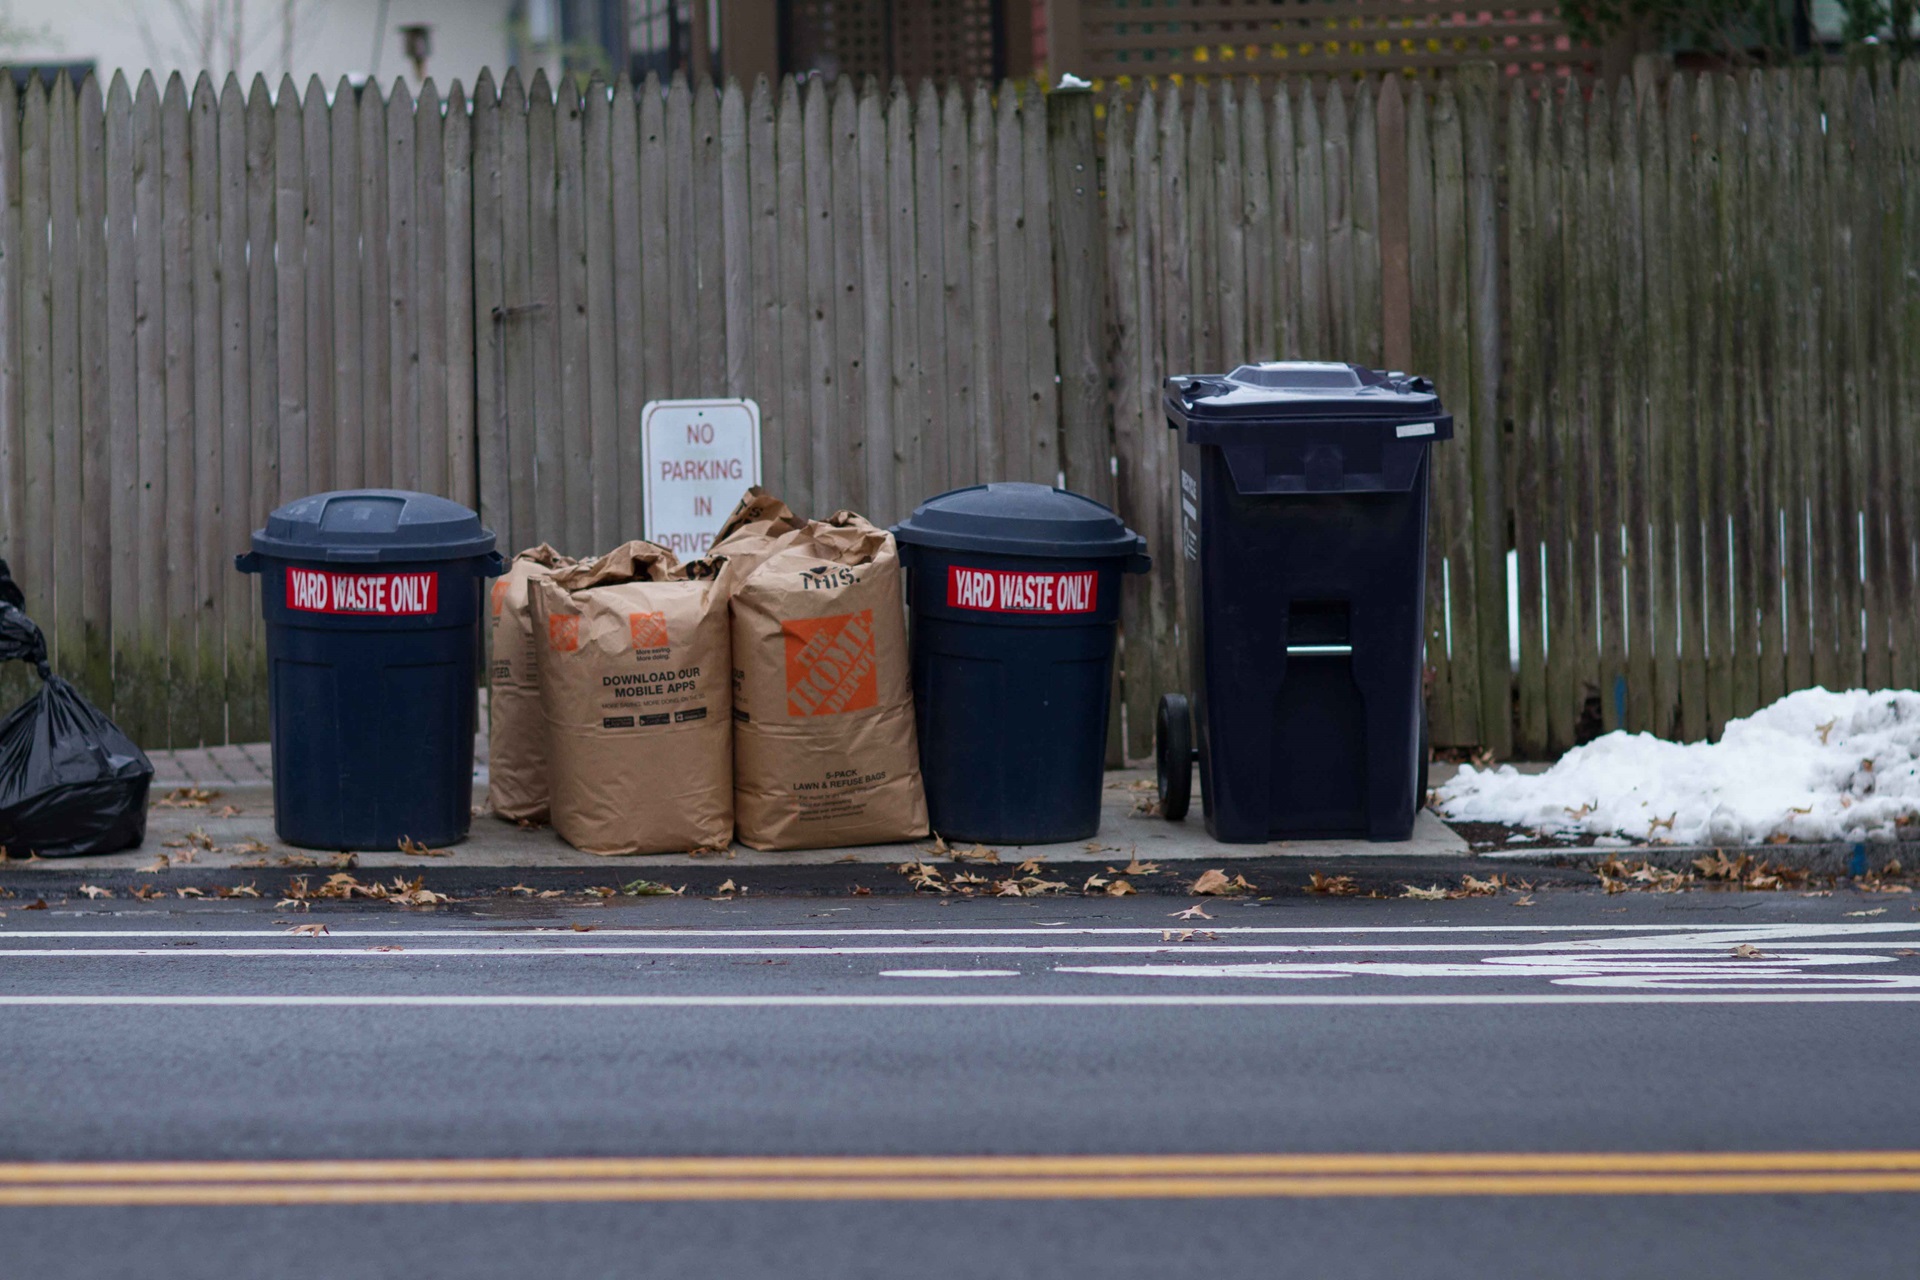 Yard Waste Pick Up - City of Cambridge, MA